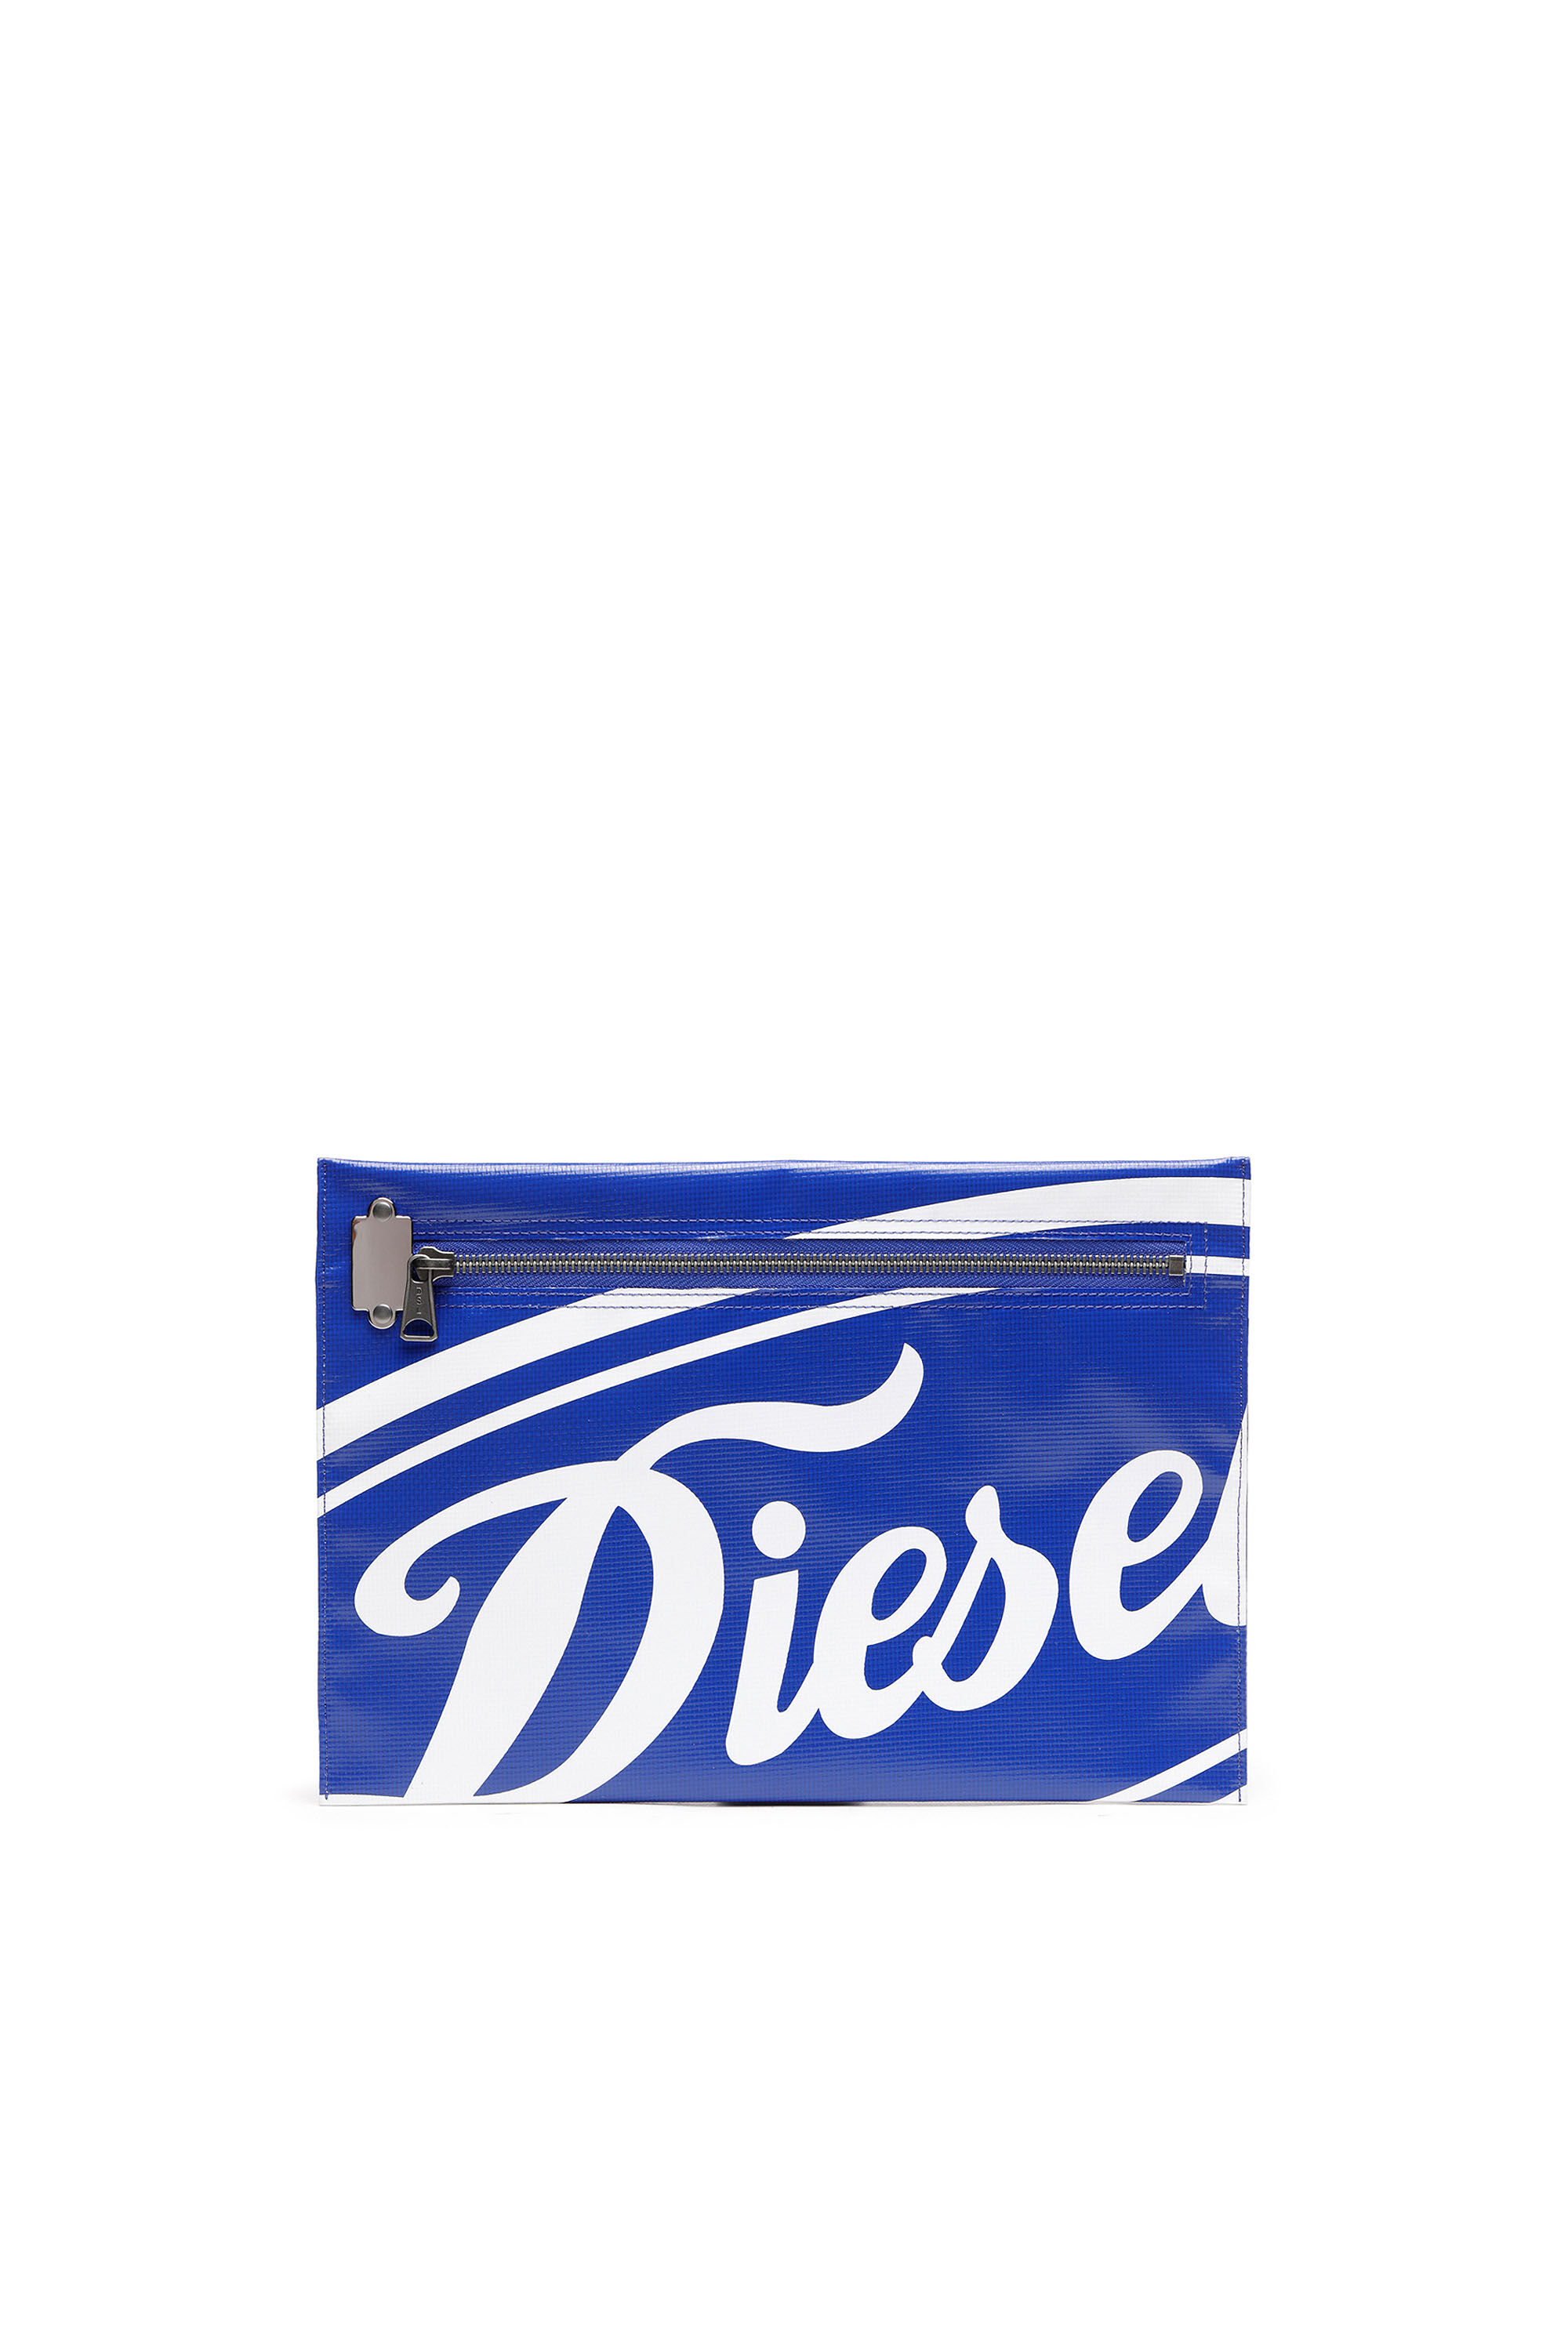 Diesel - SLYW, ブルー/ホワイト - Image 1